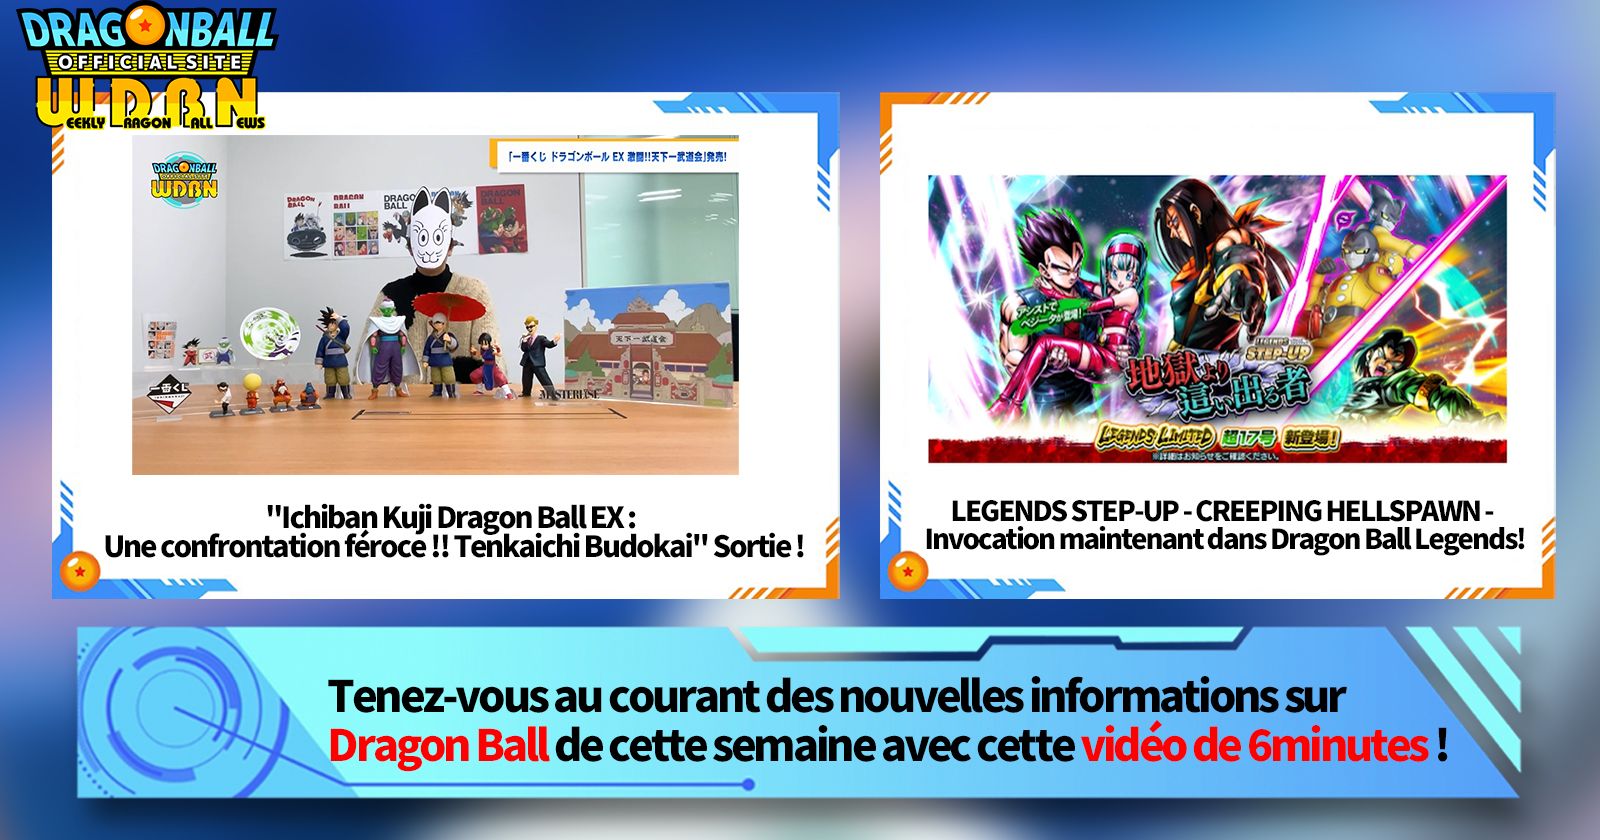 [5 février] Diffusion Nouvelles hebdomadaires Dragon Ball !